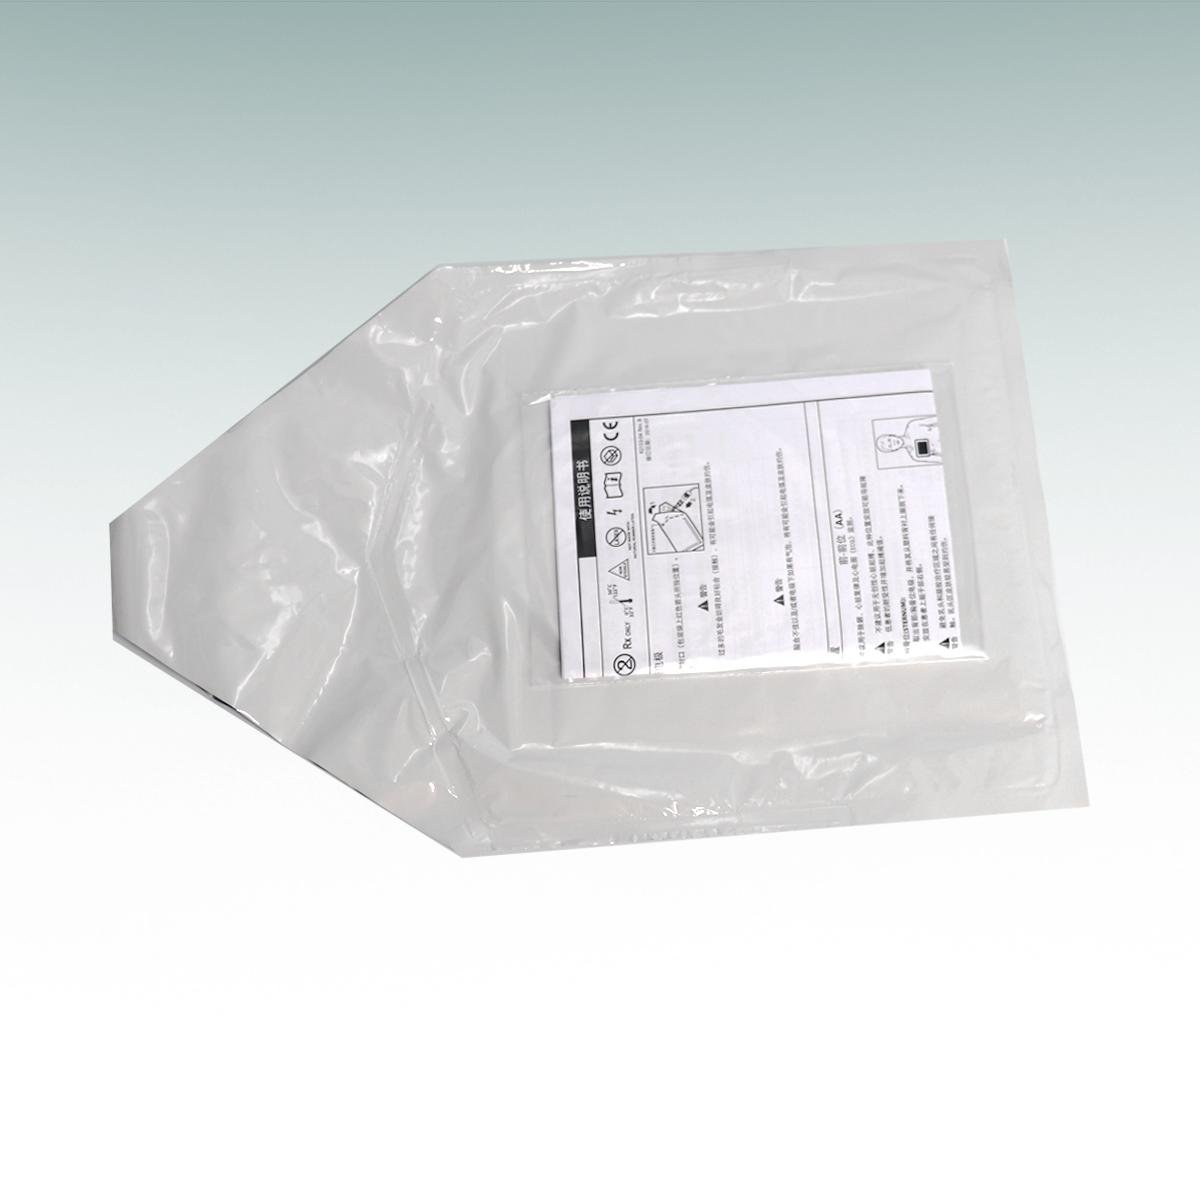 Zoll original defibrillation electrode AED 8900-4004-15 2